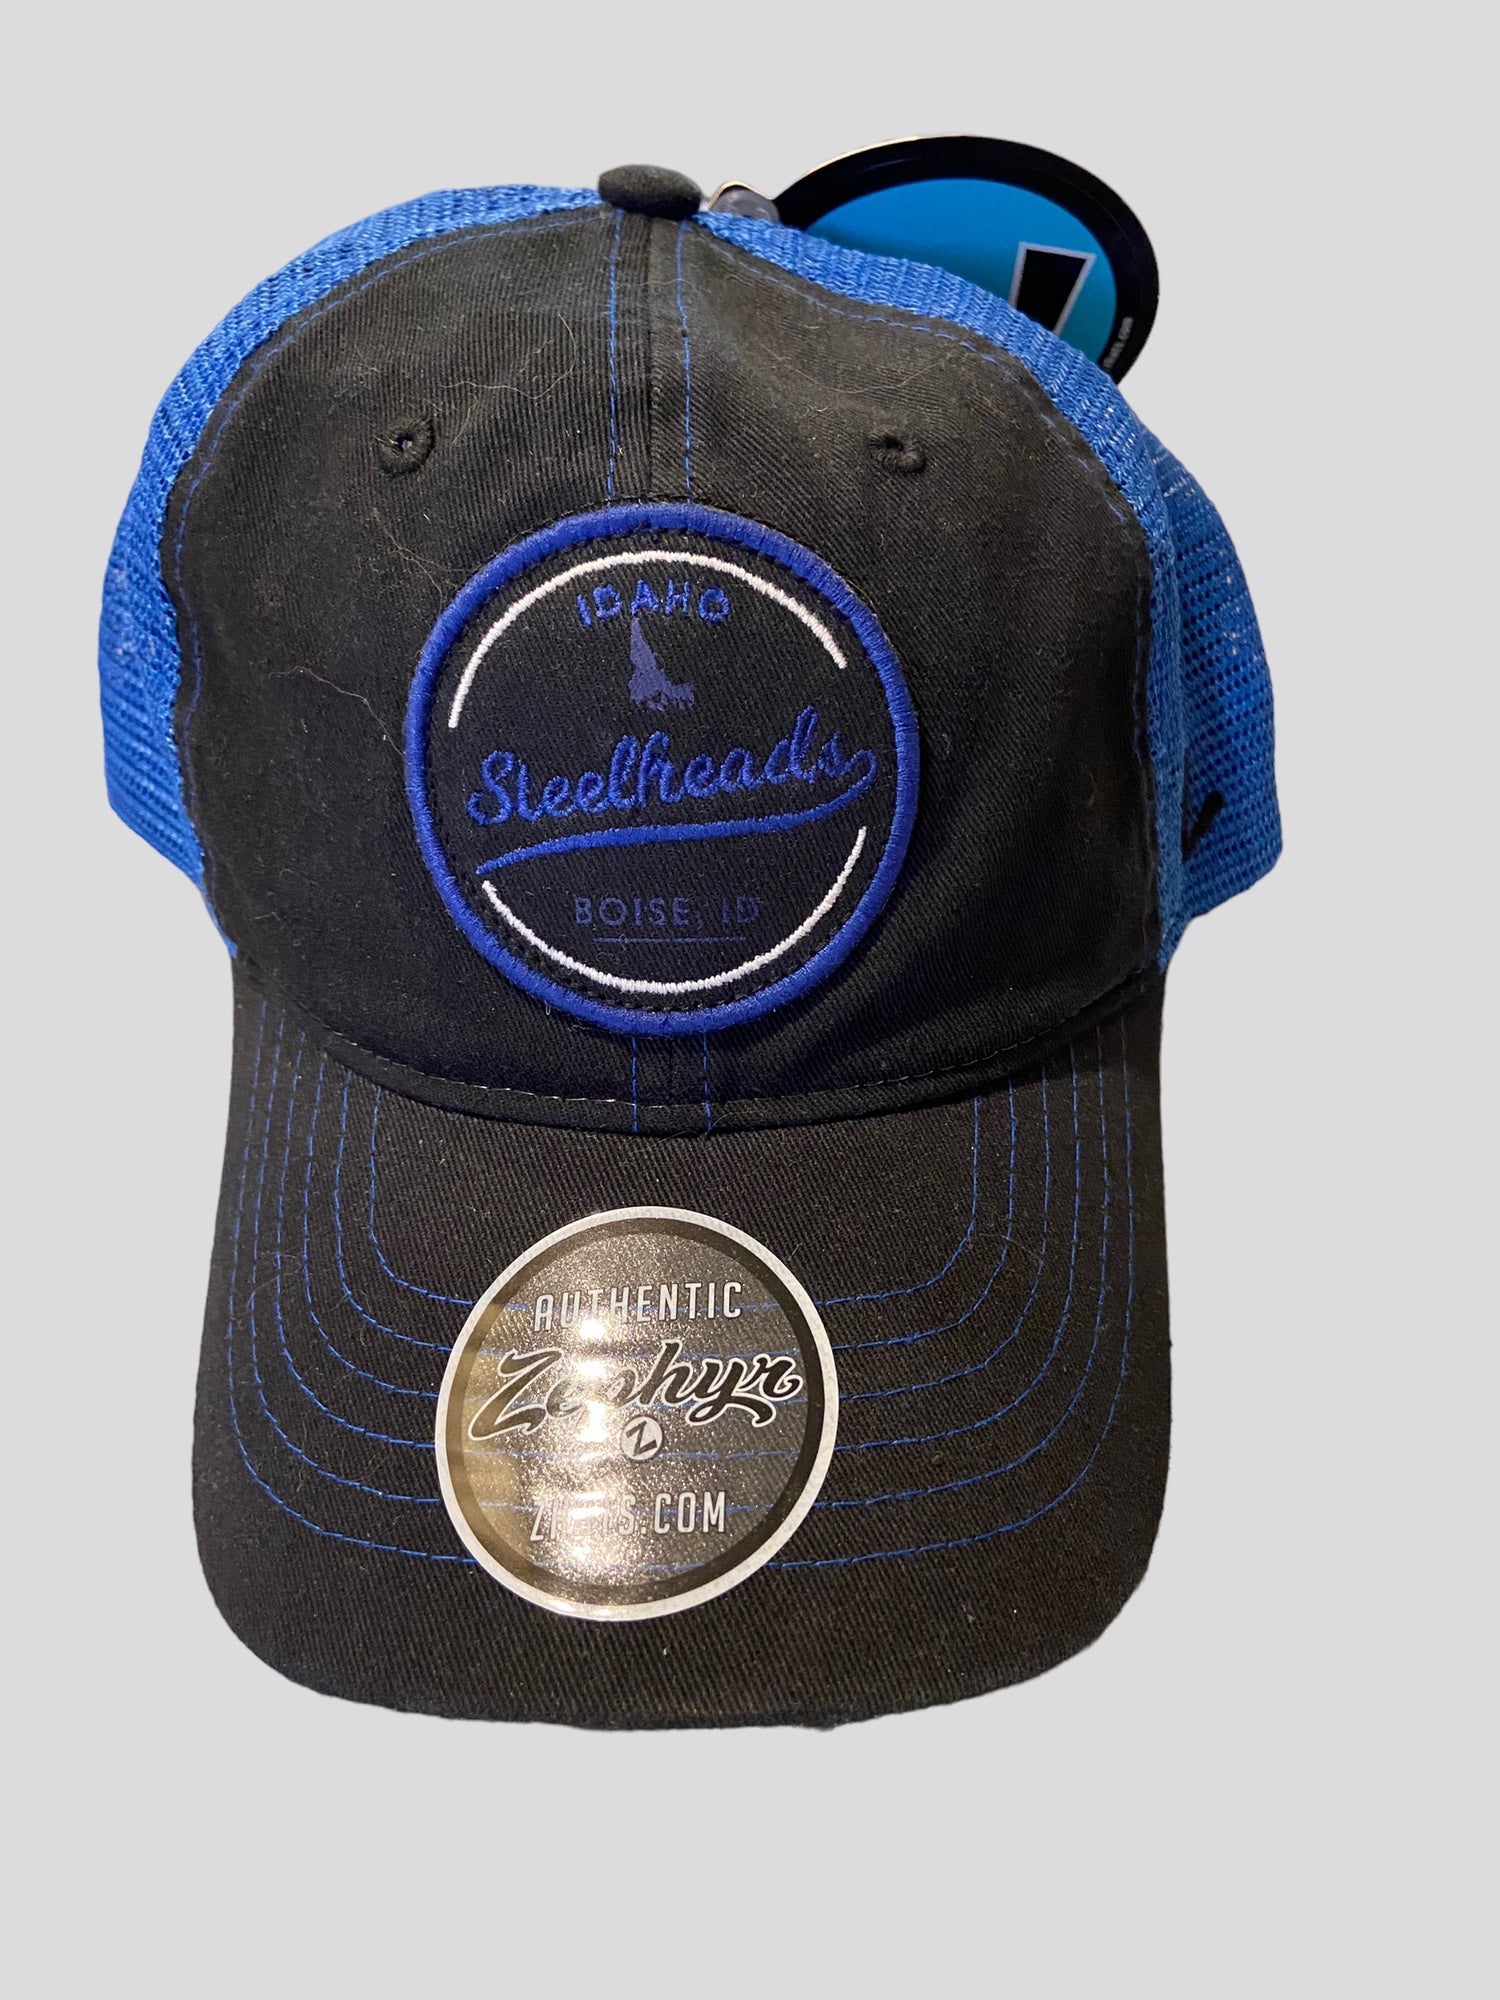 Idaho-STEELHEADS Cap for Sale by EDWARDHASKELL